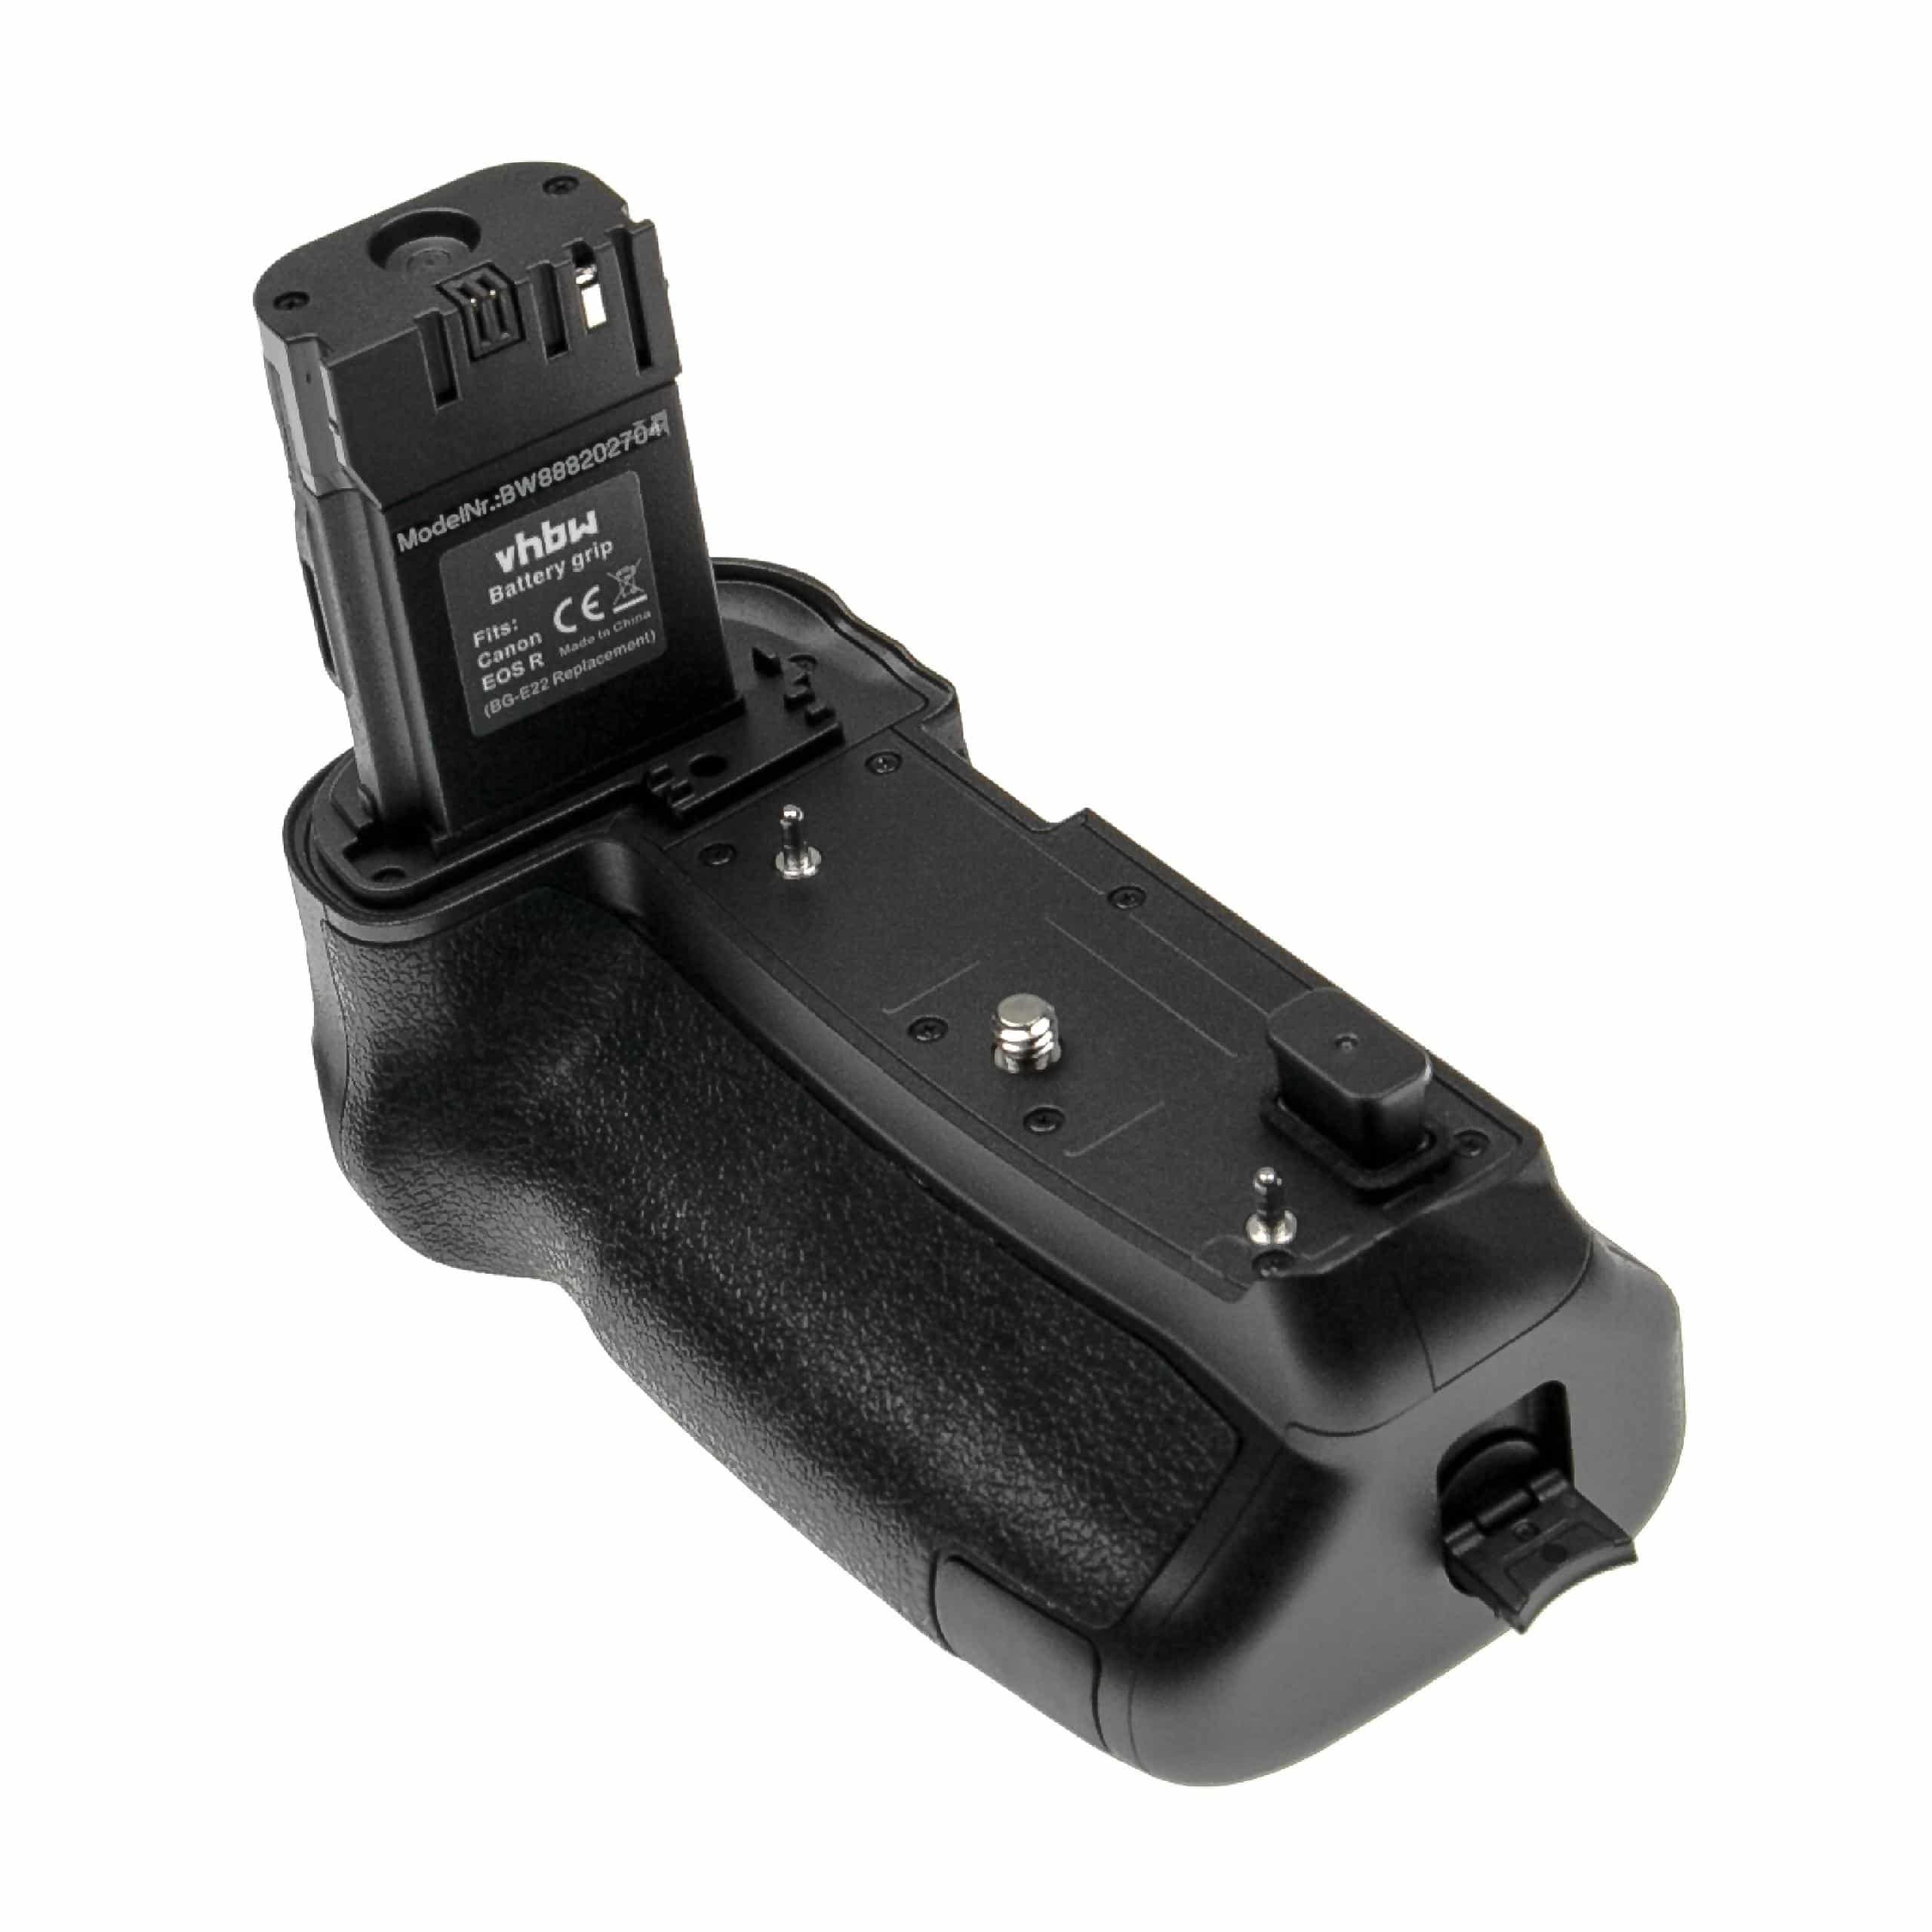 Battery Grip replaces Canon BG-E22, 3086C003 for Canon Camera 